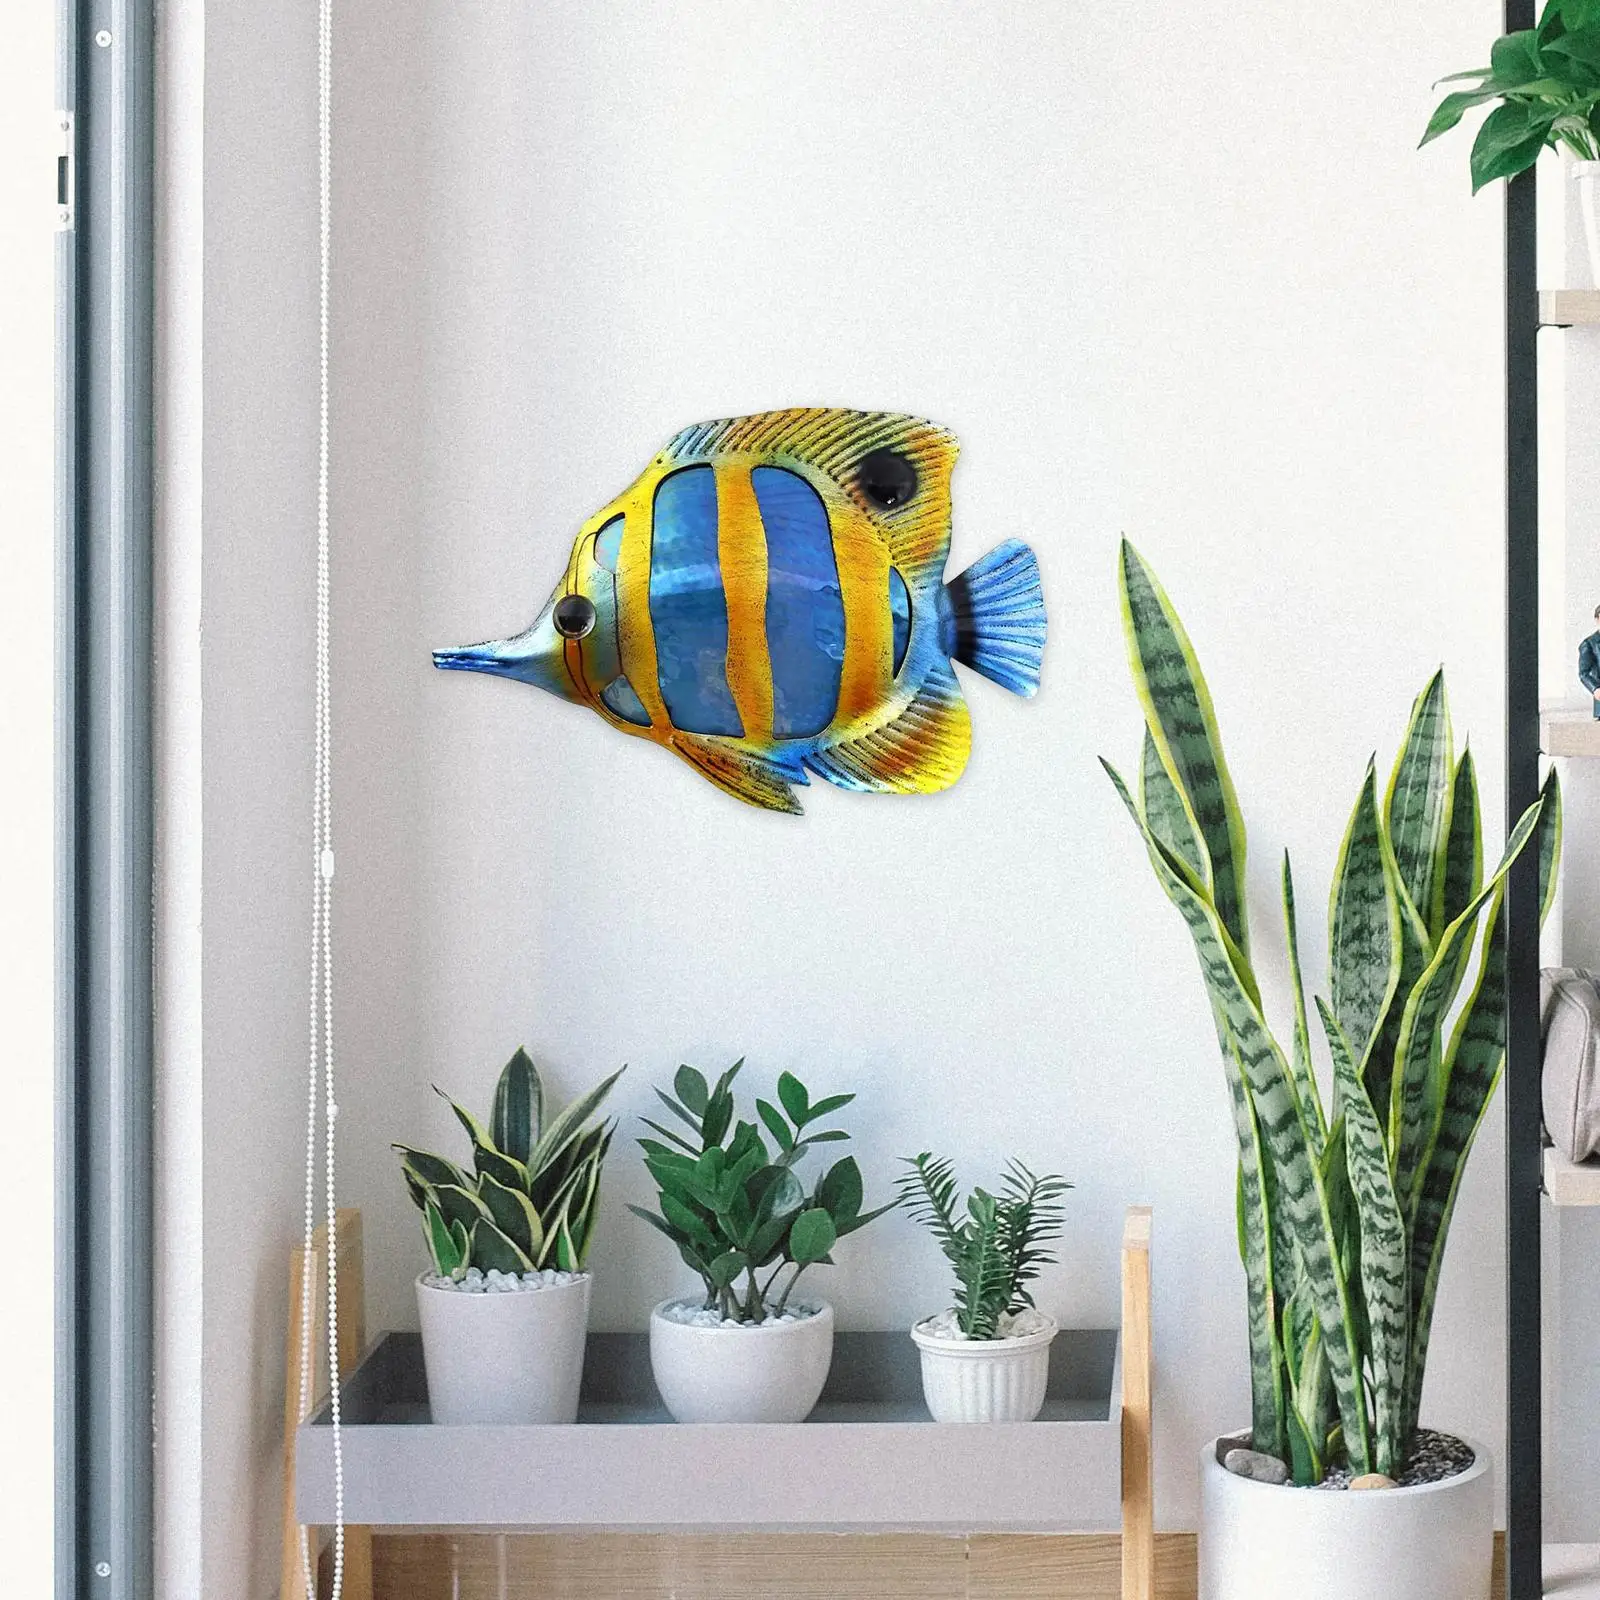 Metal Fish Wall Sculpture Decoration Hanging Creative Ornament for Bedroom Indoor Pool Bathroom Home